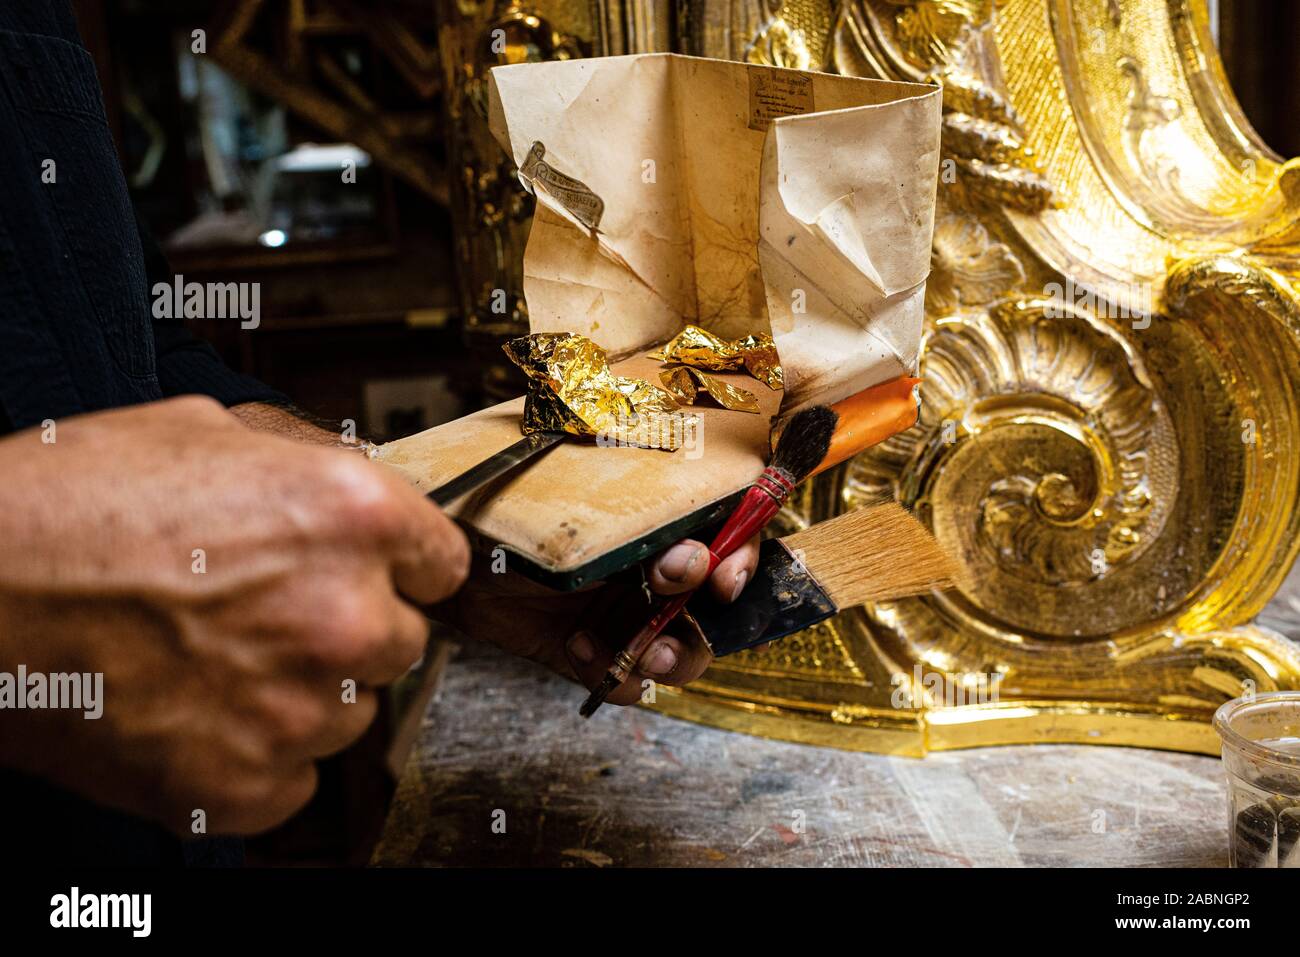 Geraudot (north-eastern France): in the Uwe Schaefer workshop, gilder working with gold leaf. Uwe Schaefer is specialized in the restoration, conserva Stock Photo